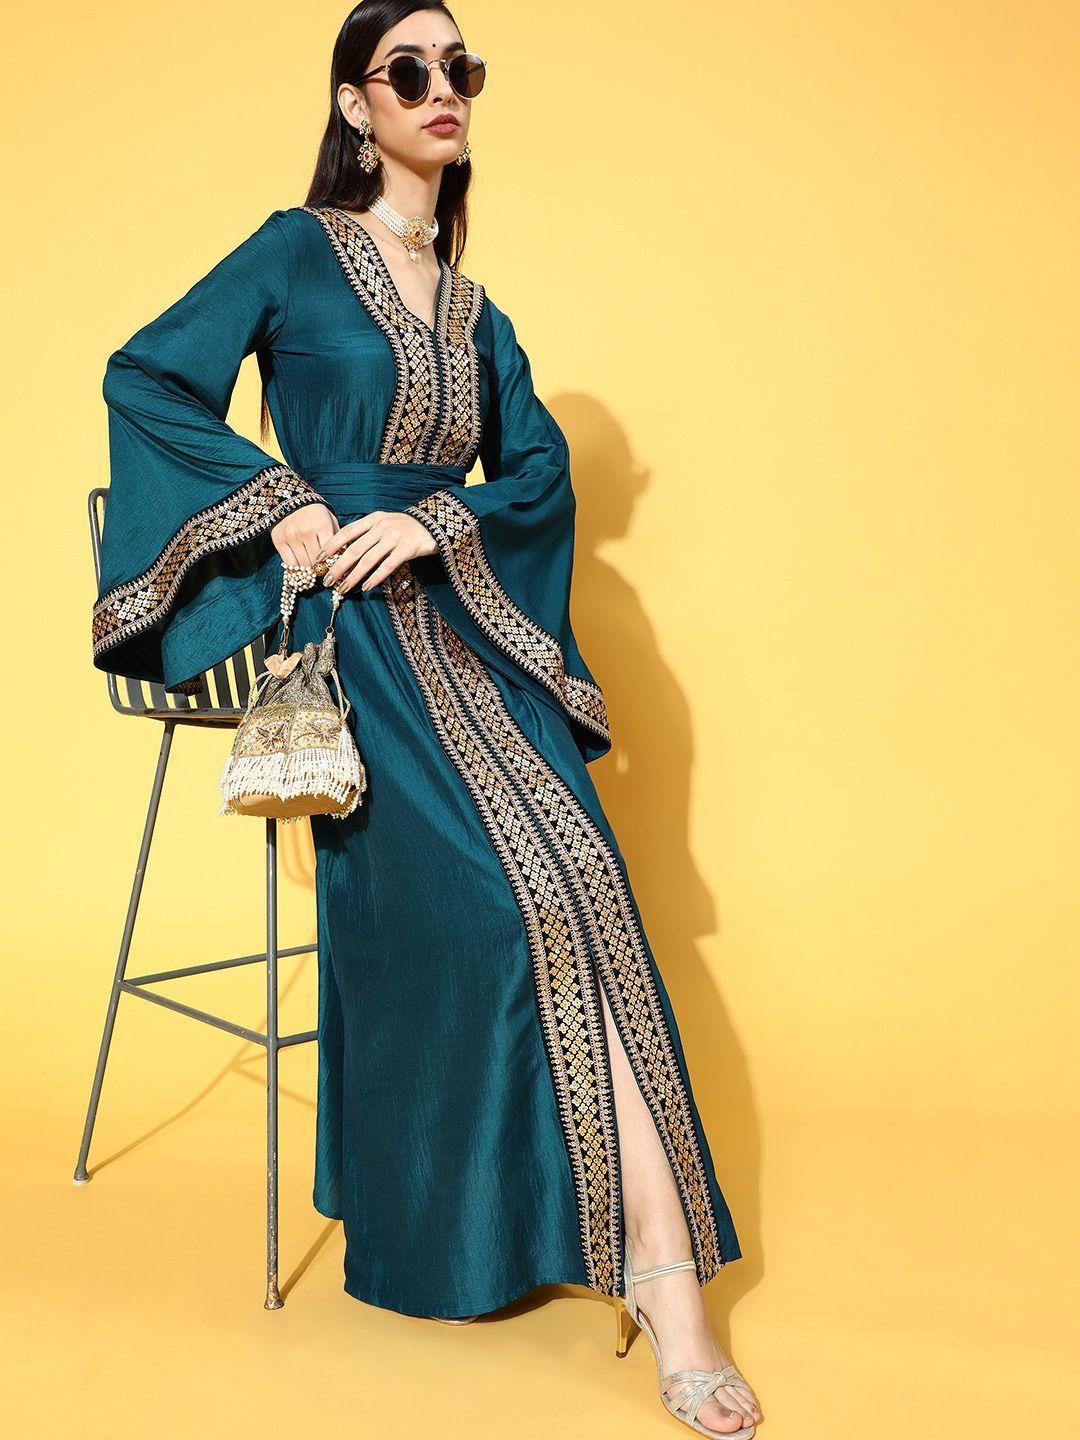 inddus women teal & golden ethnic motifs ethnic a-line maxi dress with a belt